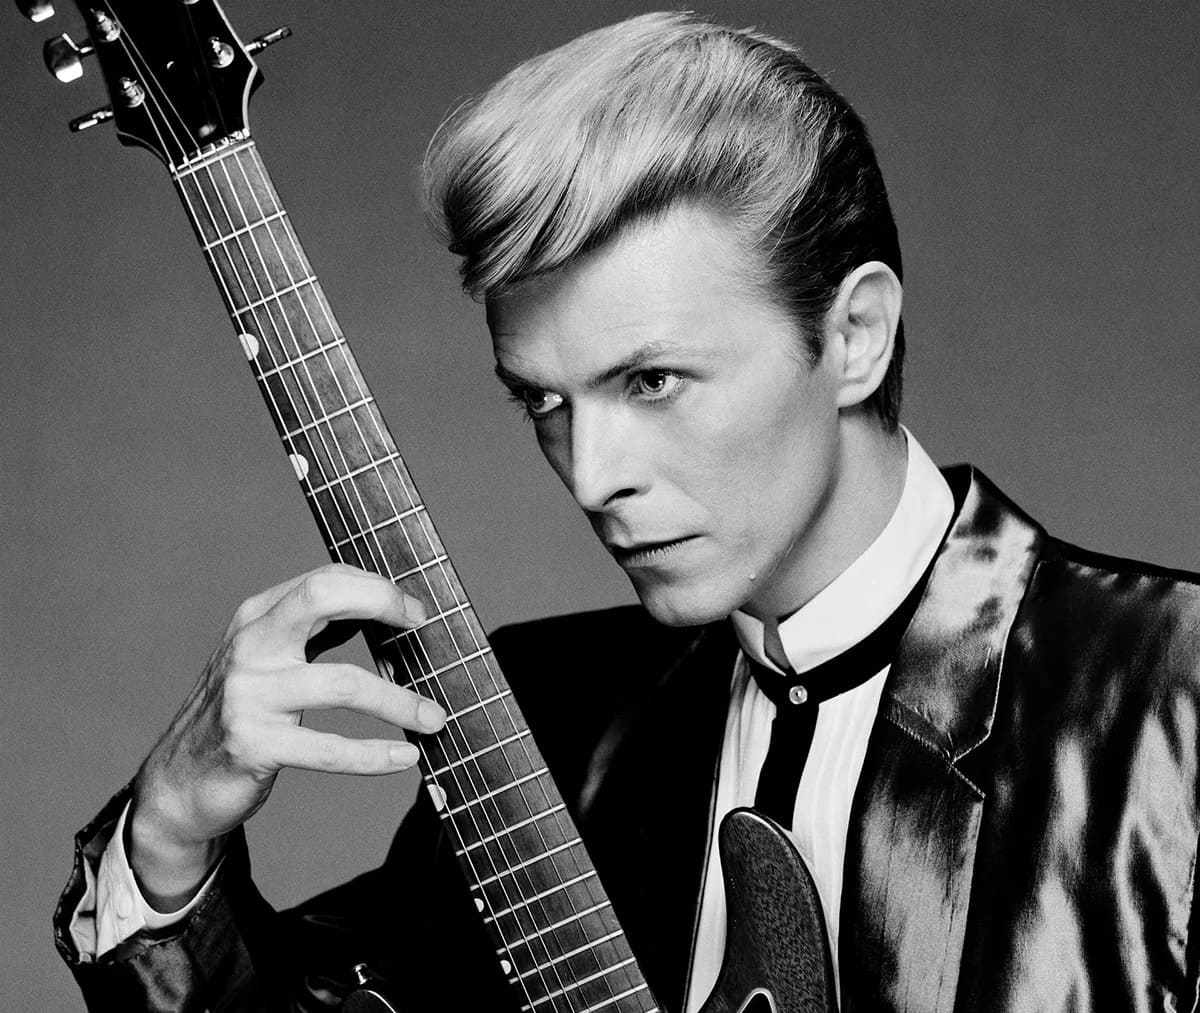 Legendary rock chameleon David Bowie